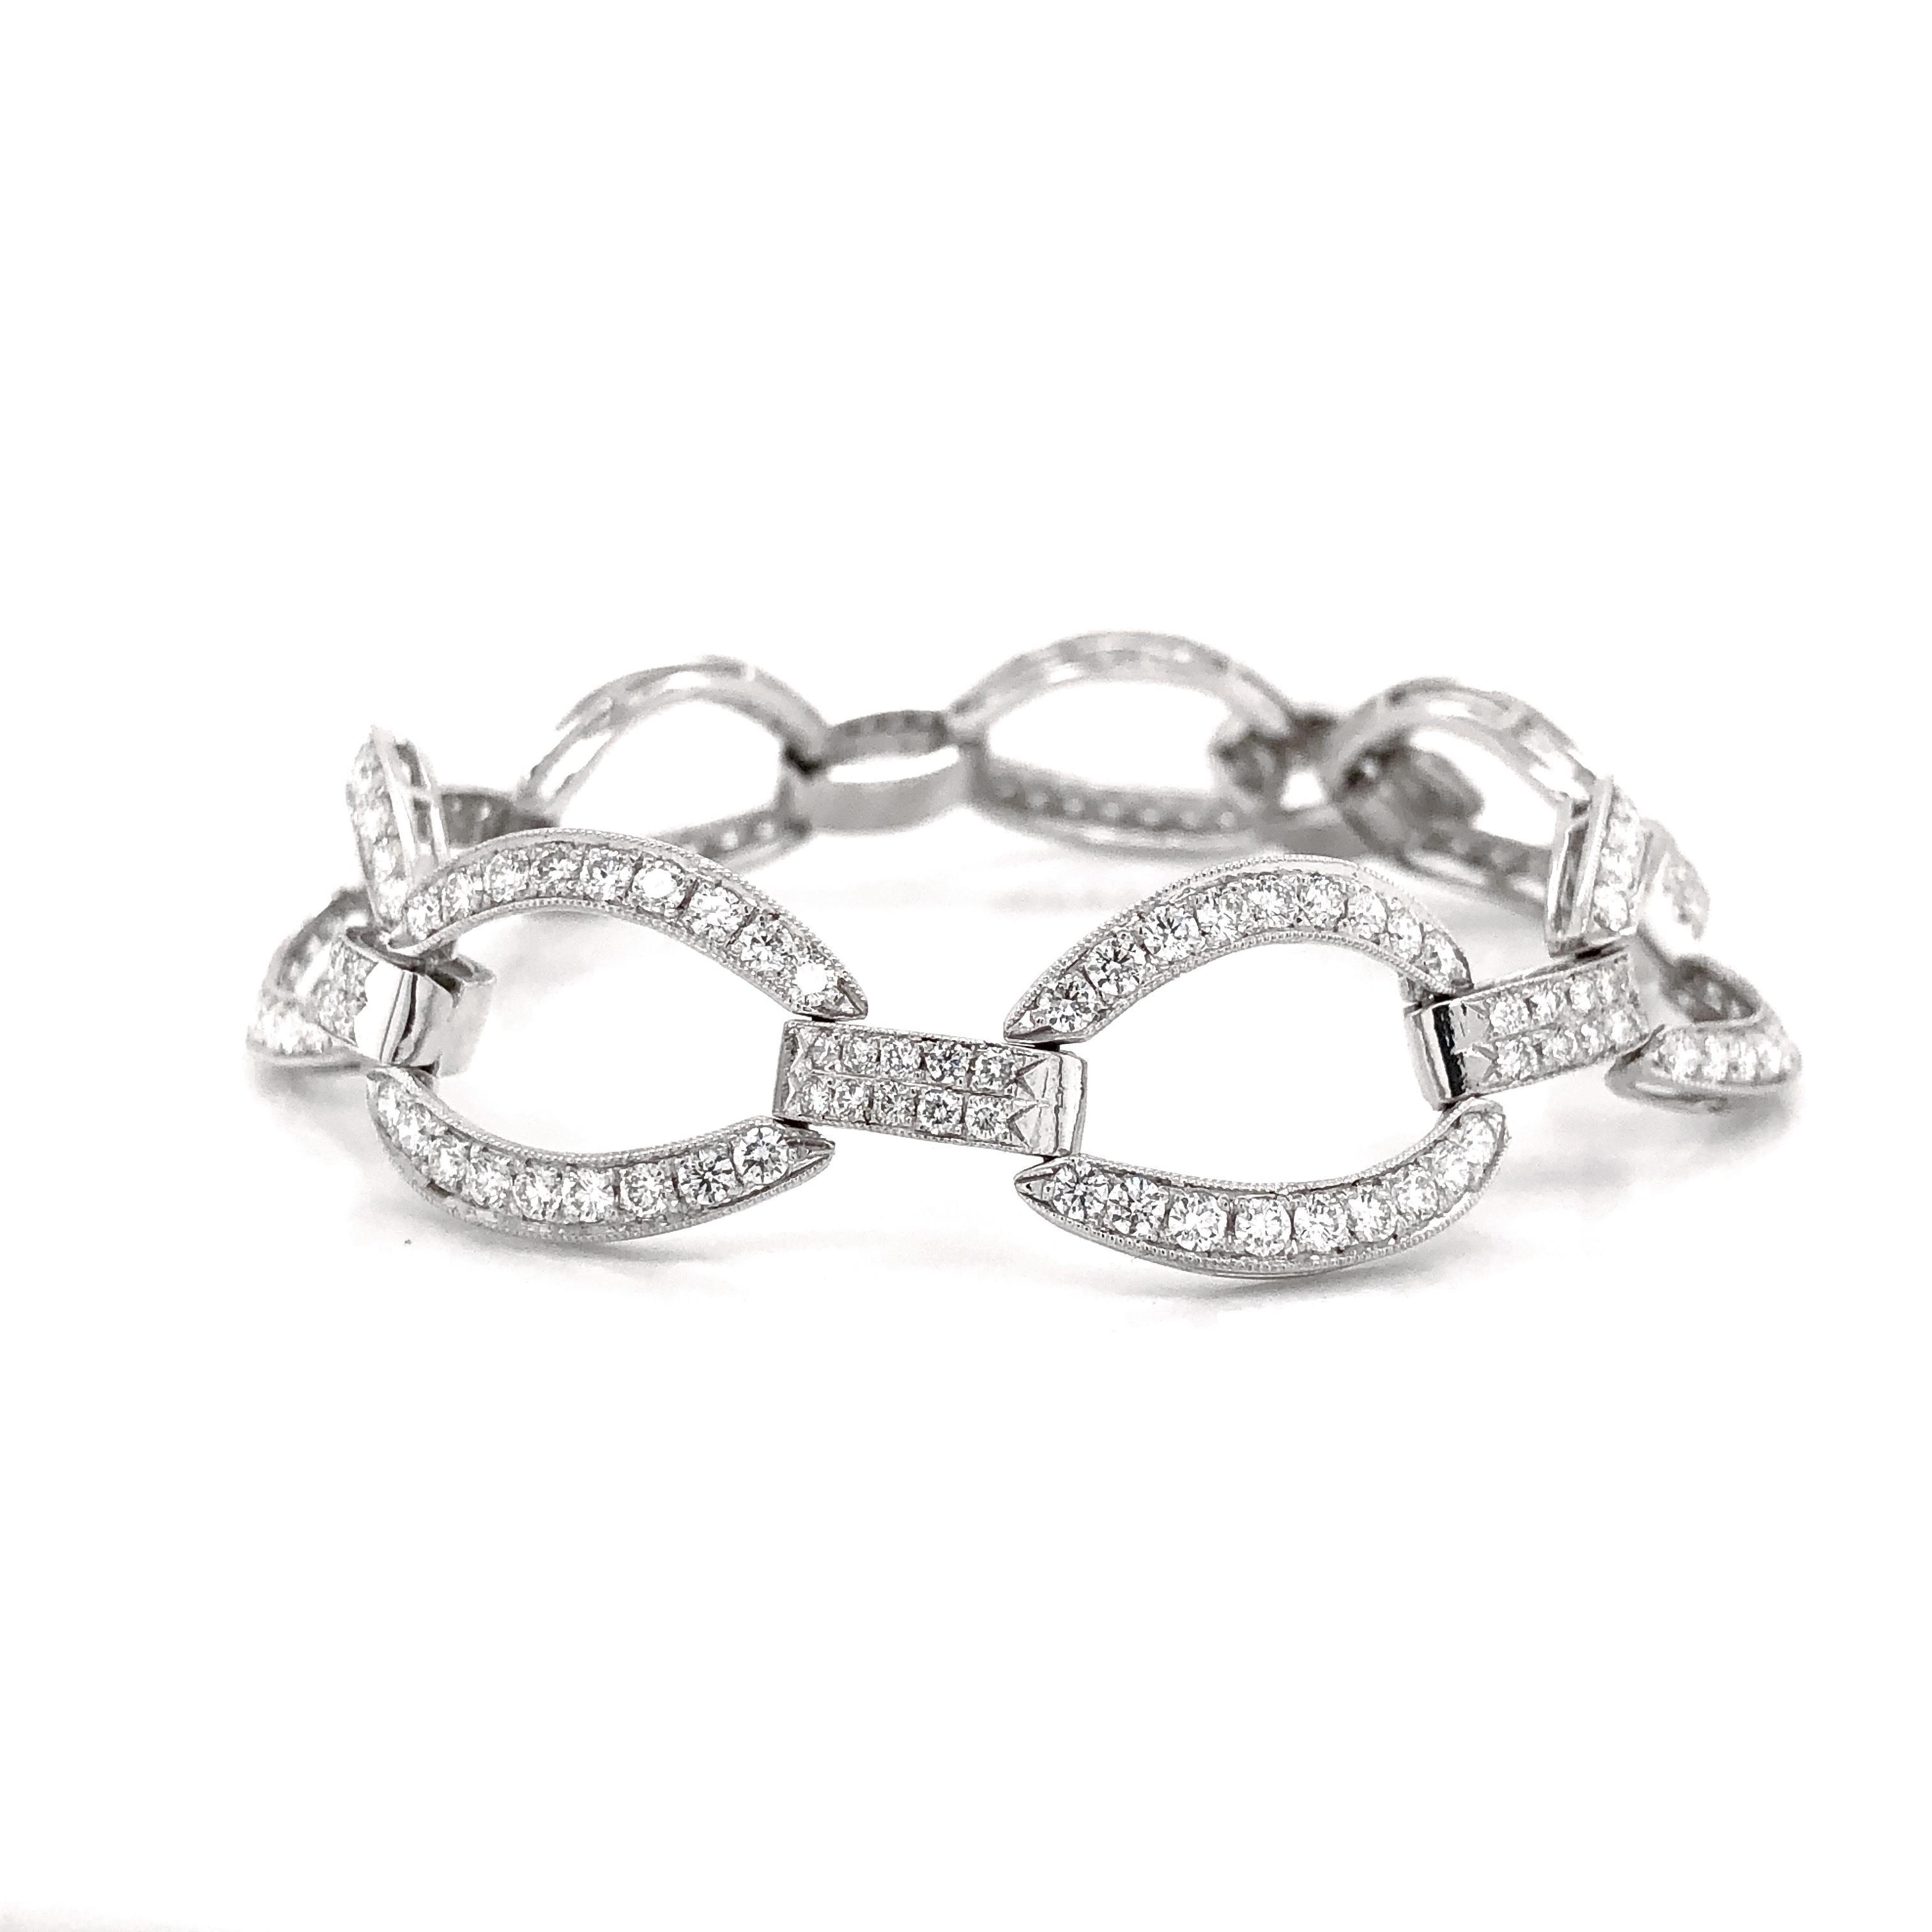 Contemporary Art Deco Inspired Round Cut Diamonds 6.21 Carat Platinum Chain Bracelet For Sale